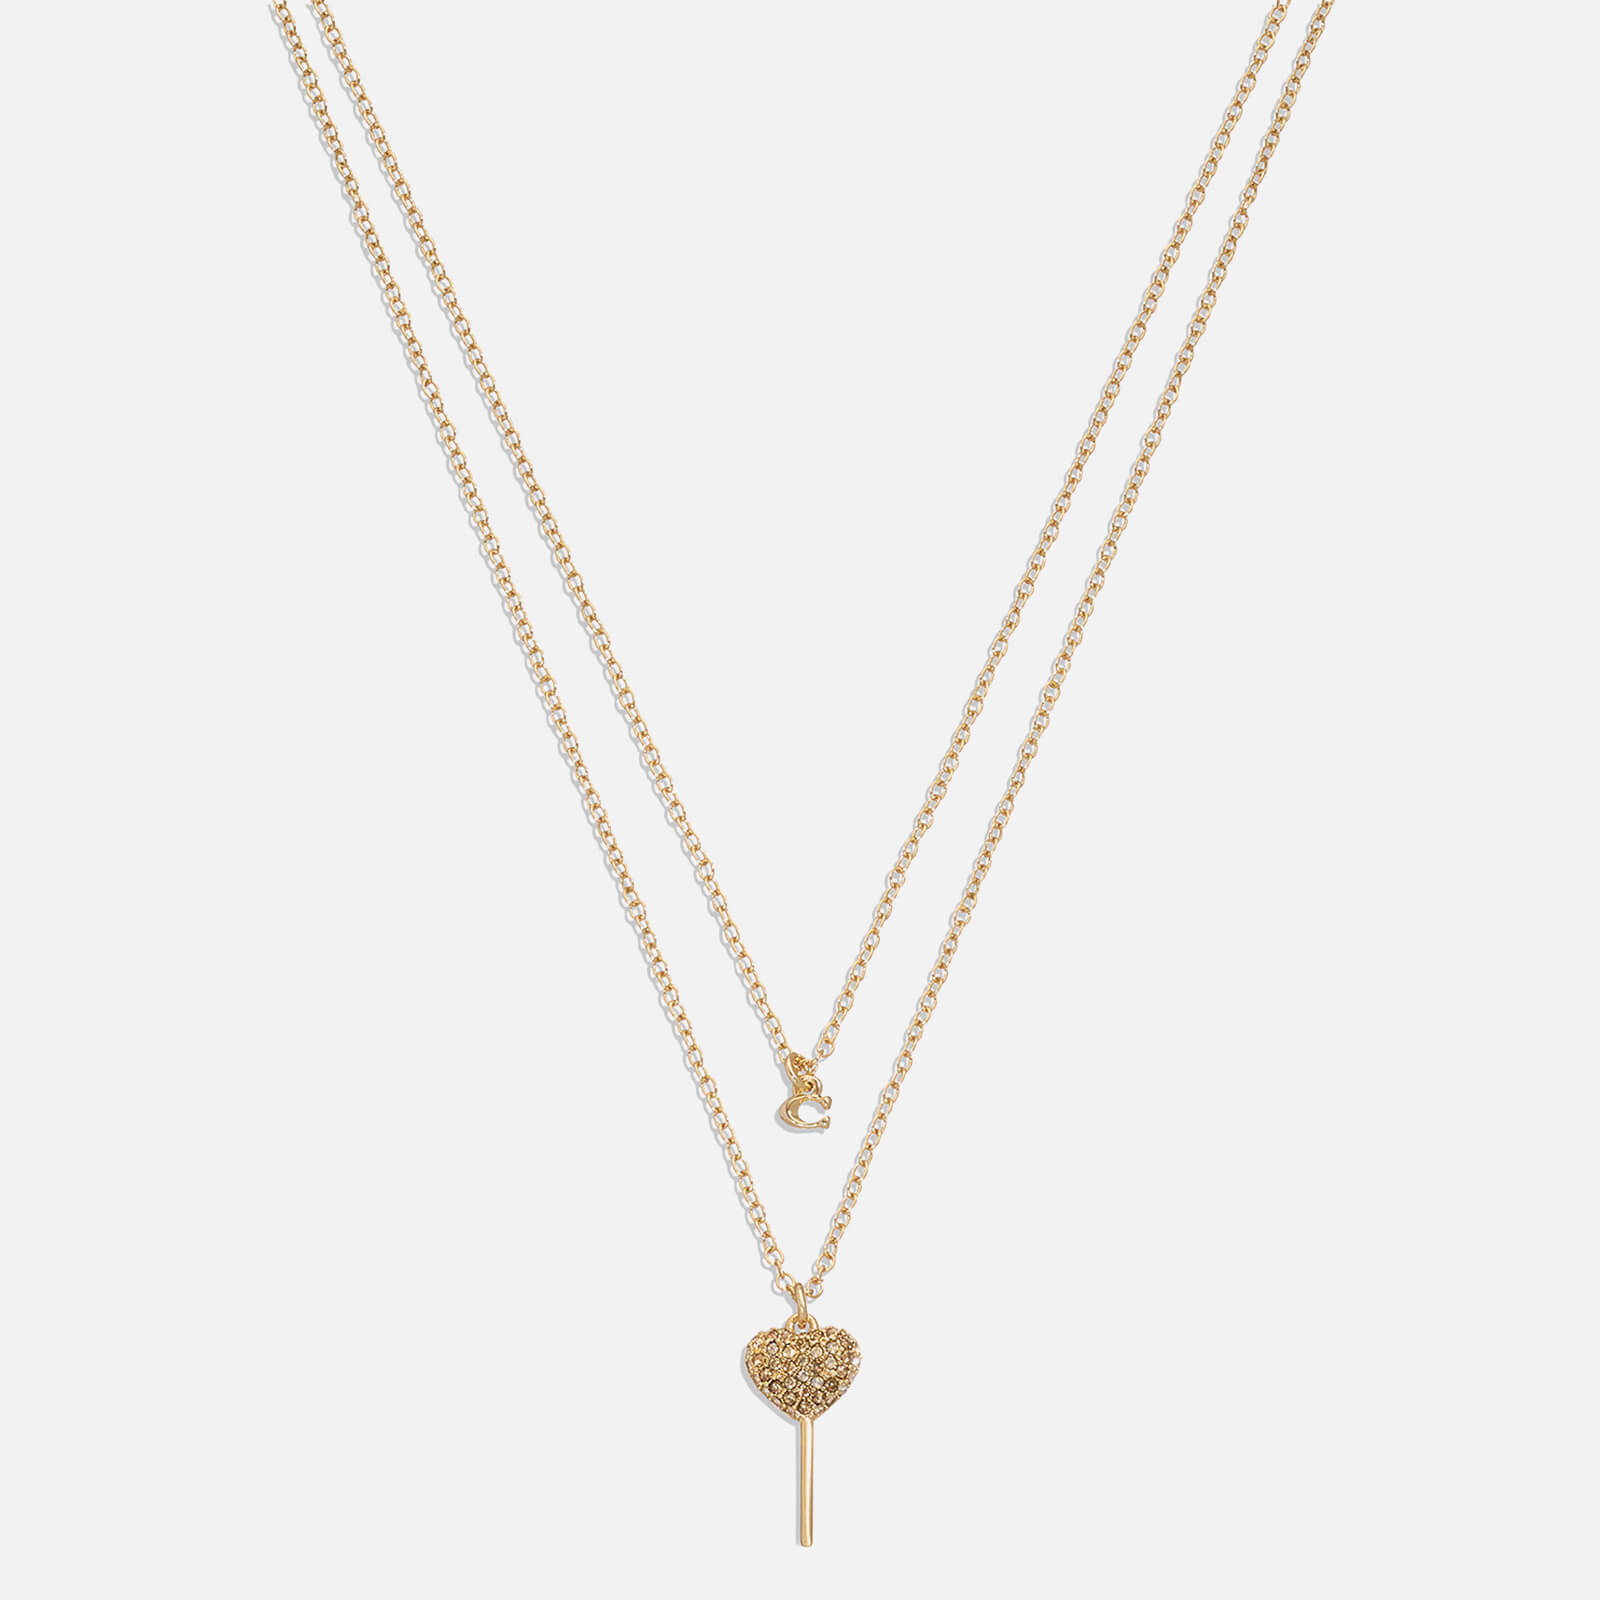 Coach Lollipop Gold-Toned Brass Multi Layer Necklace